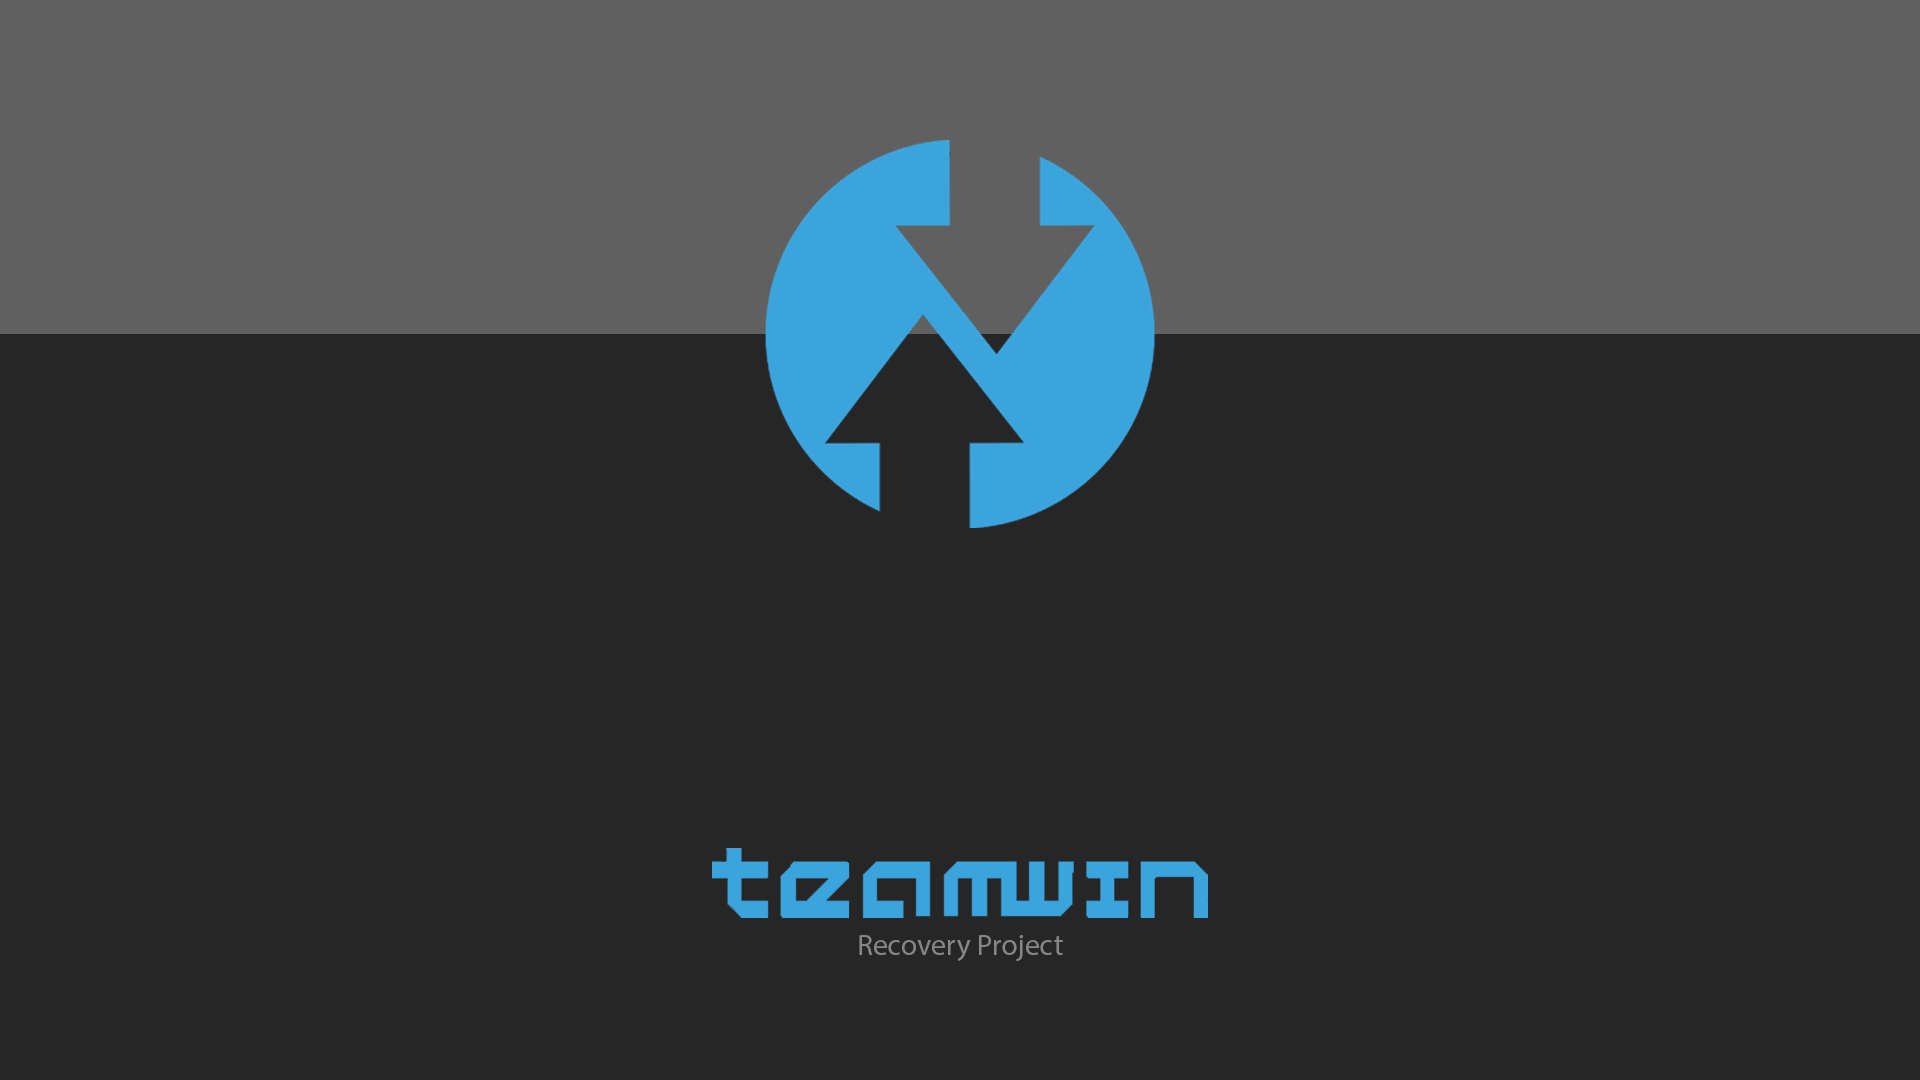 Redmi Note 7 Pro Twrp